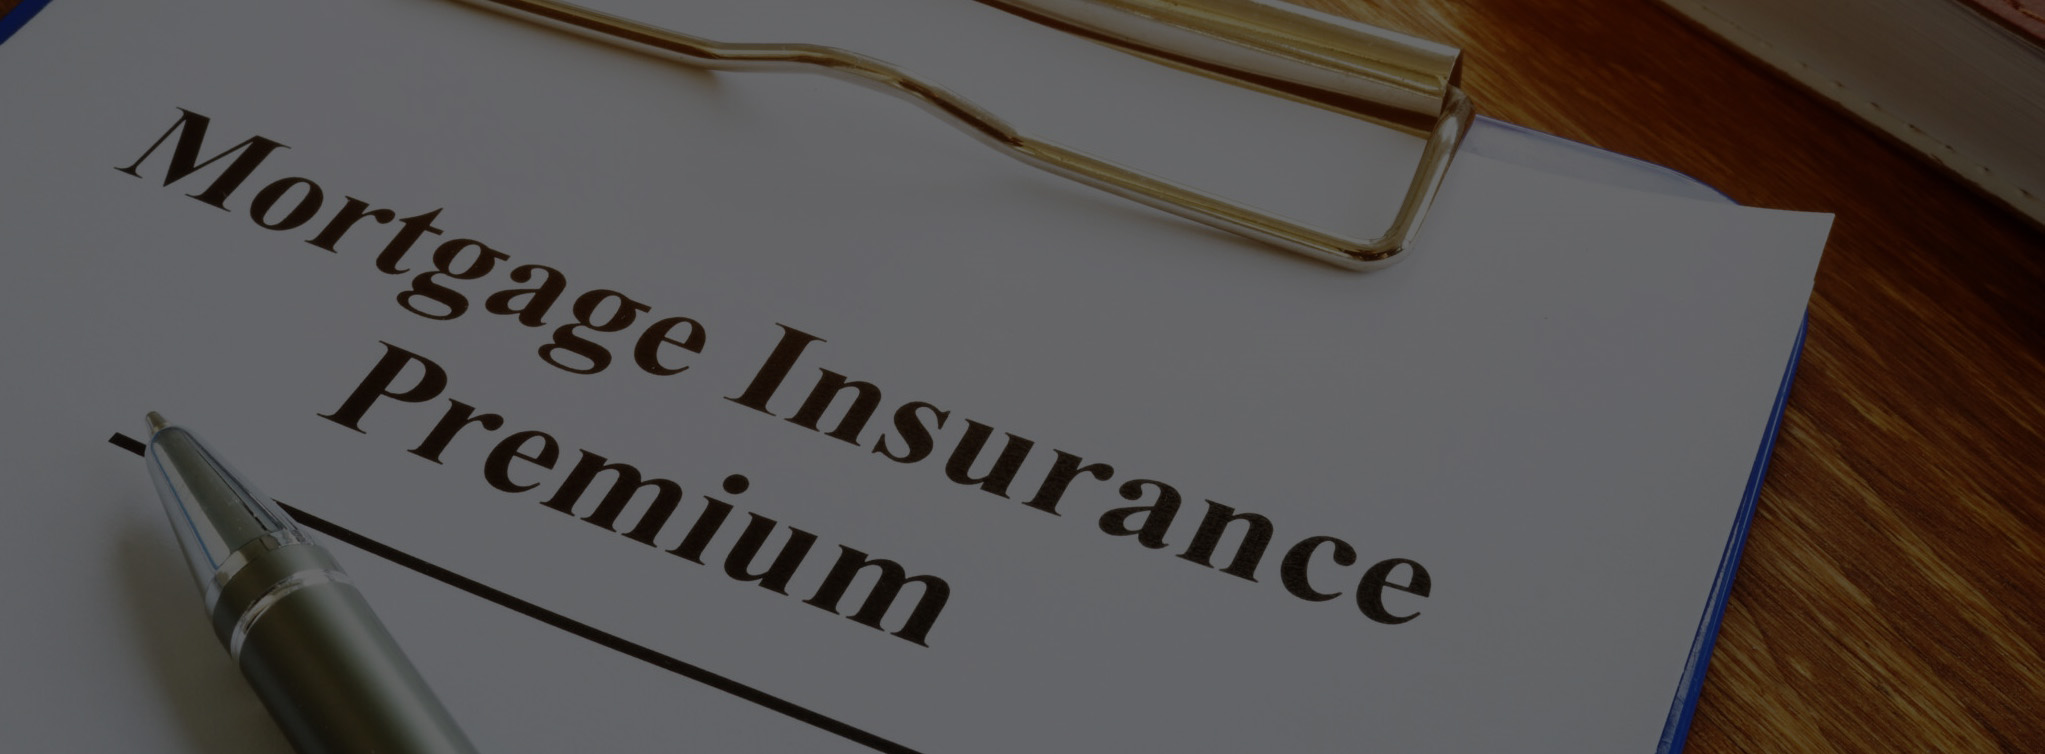 mortgage insurance premium blog image